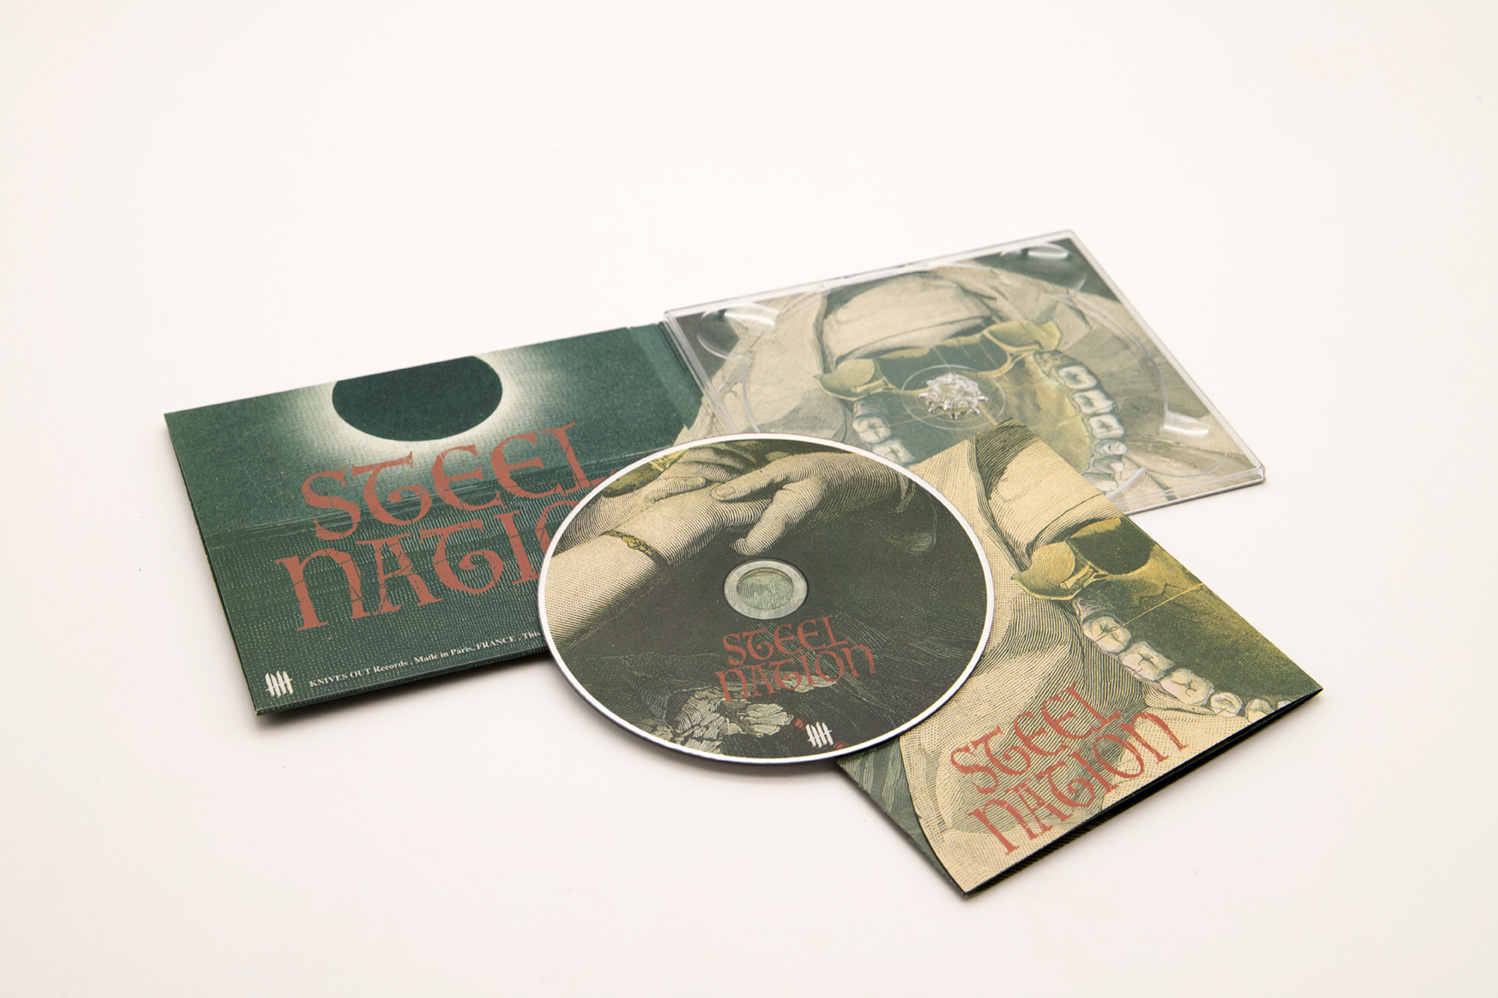 STEEL NATION "The Big Sleep" Deluxe Digipack CD